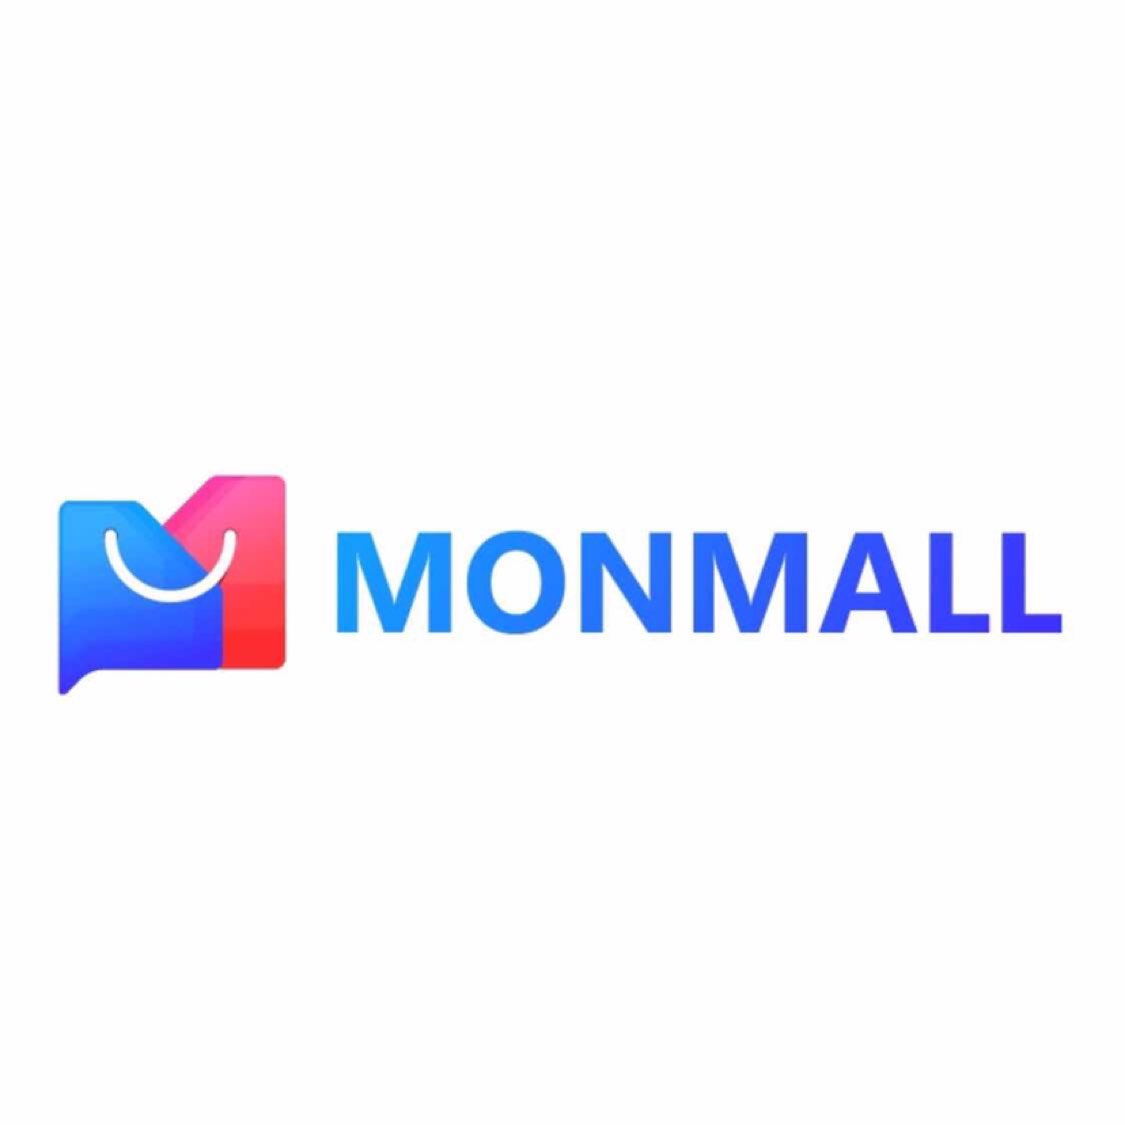 MONMALL